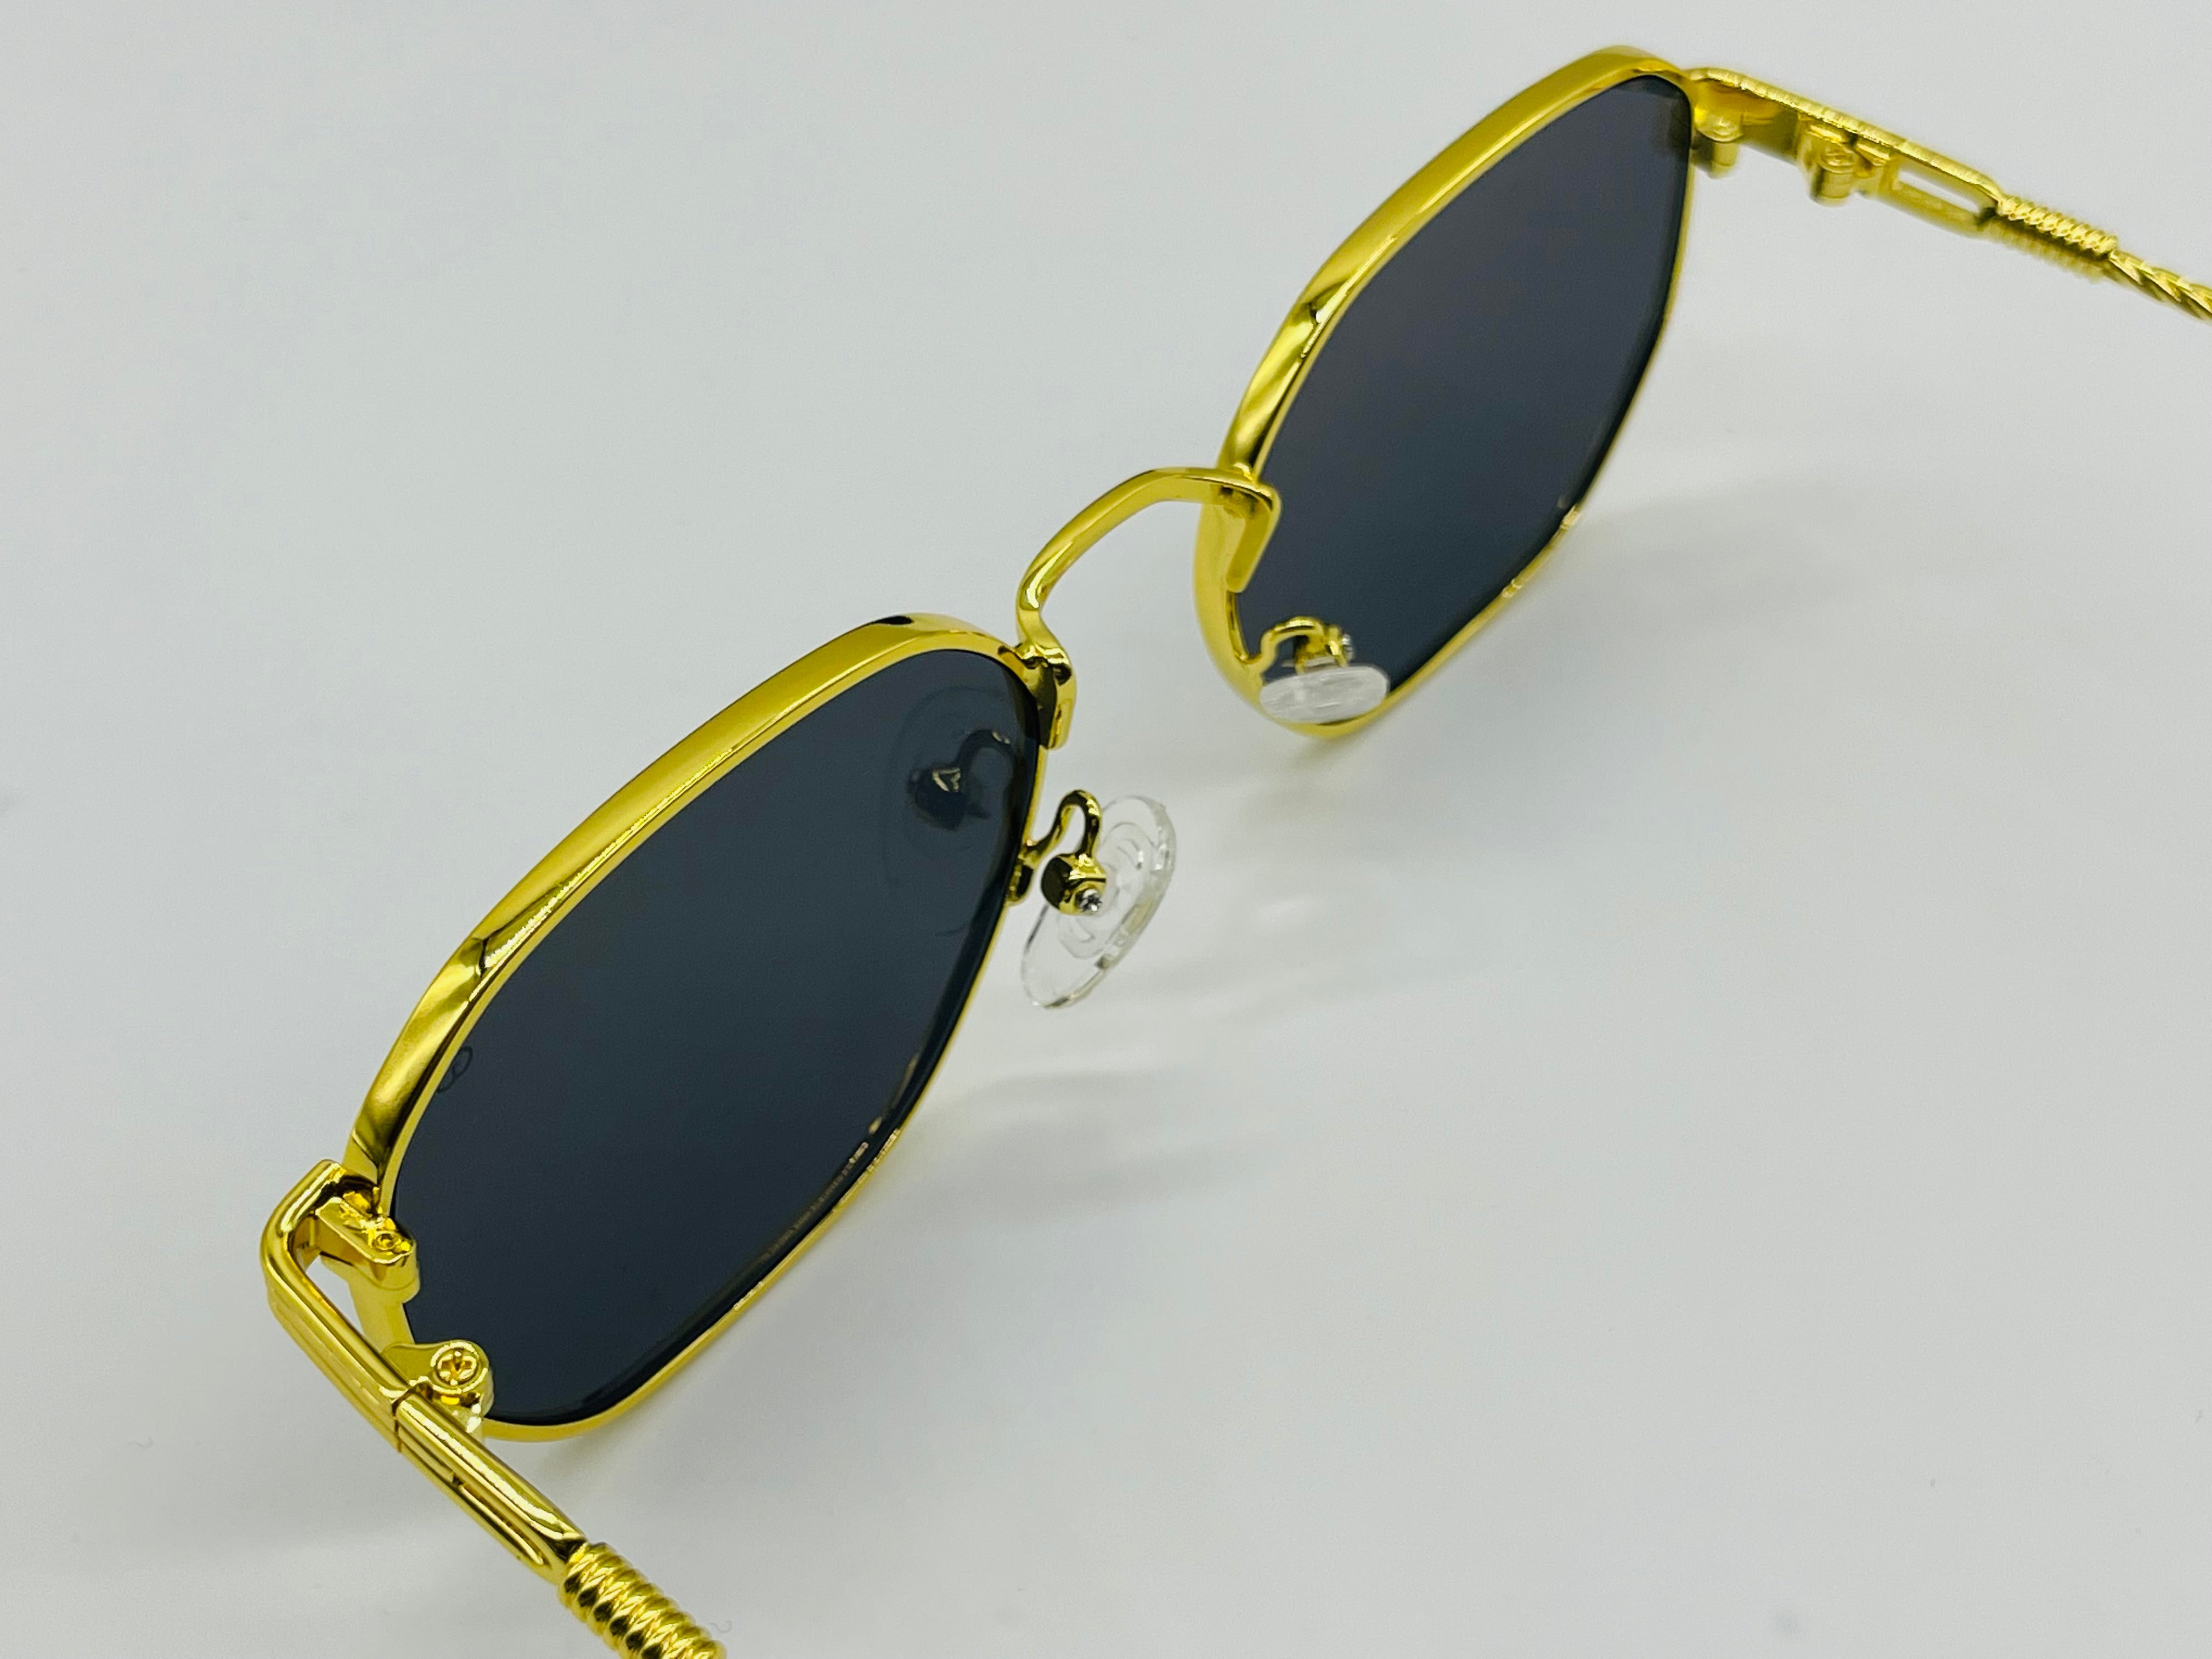 98187 Classic HD Polarized UV400 Sunglasses